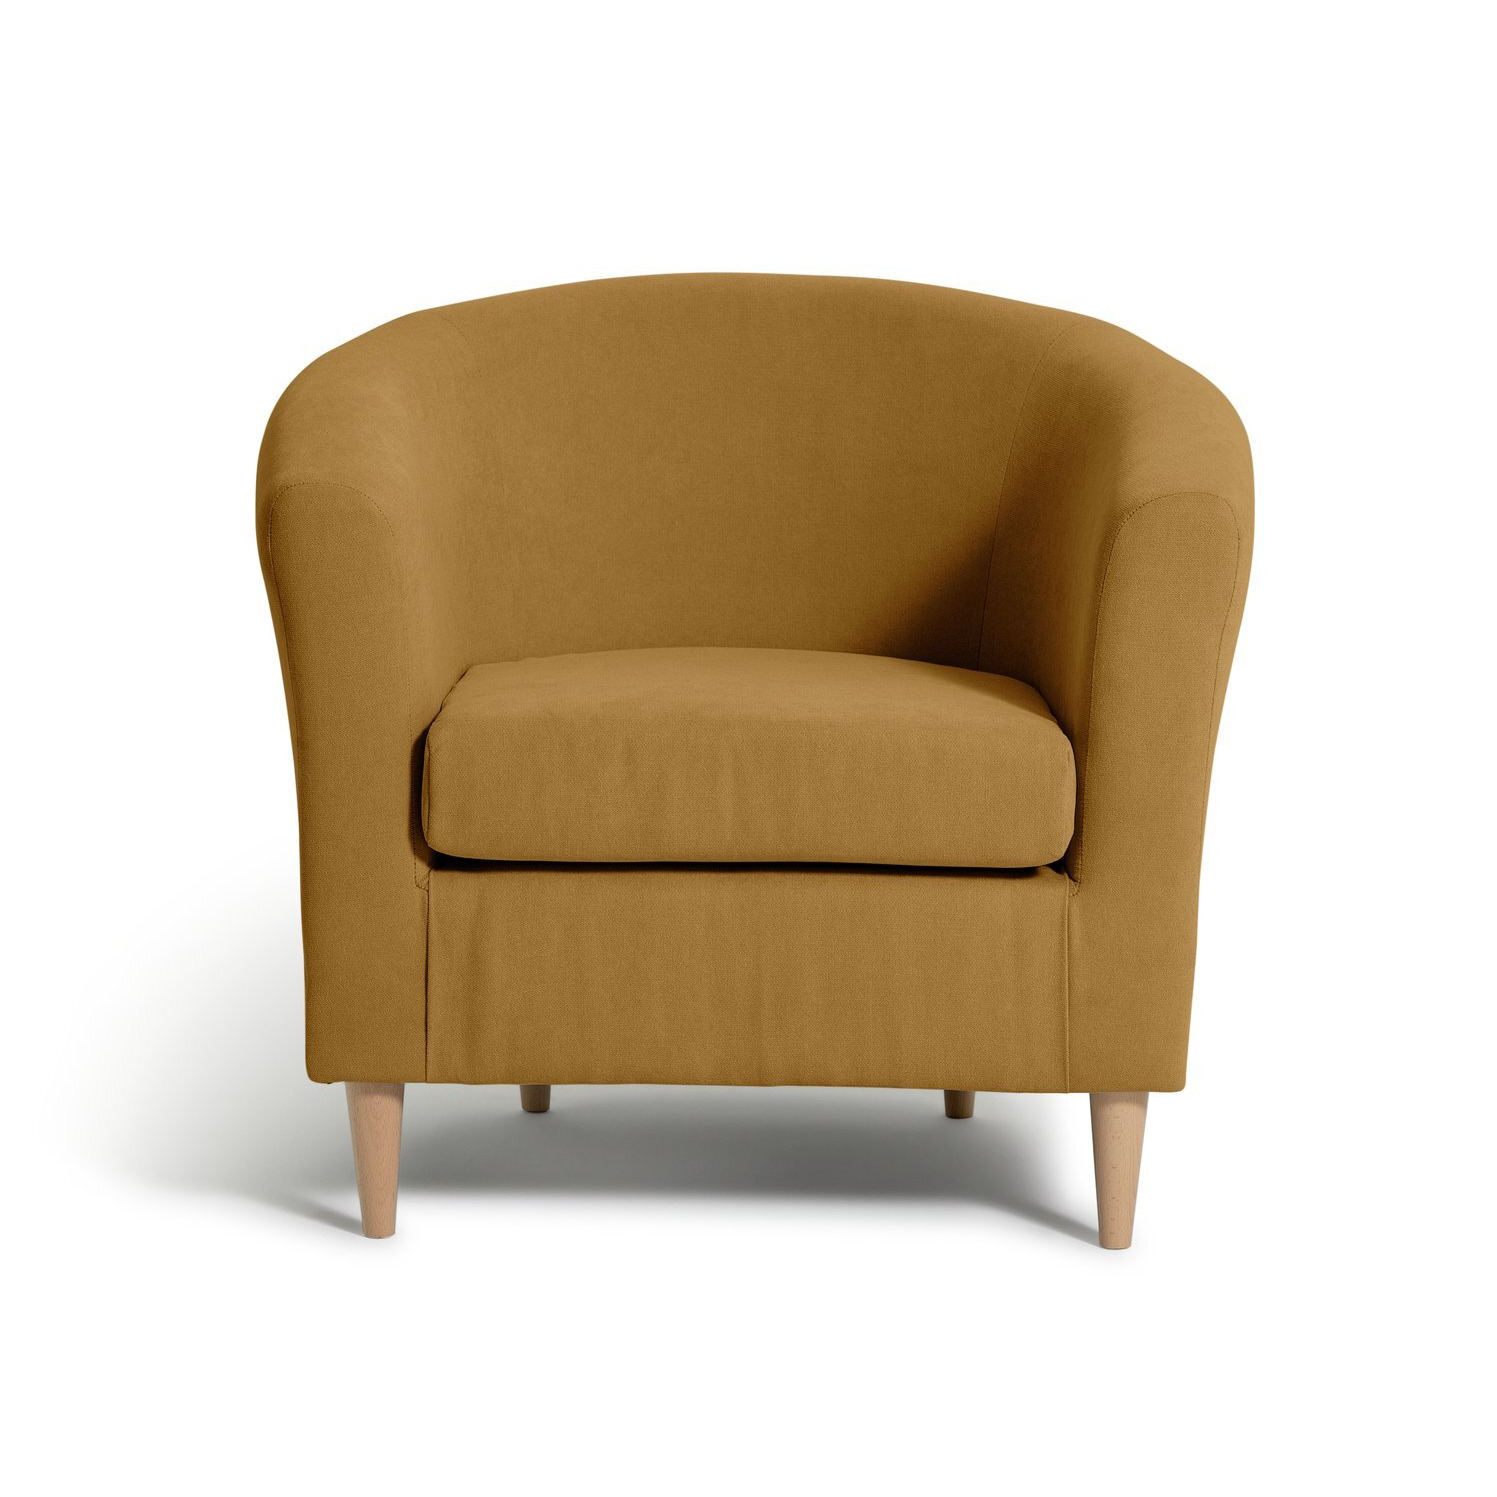 Habitat Fabric Tub Chair - Mustard - image 1